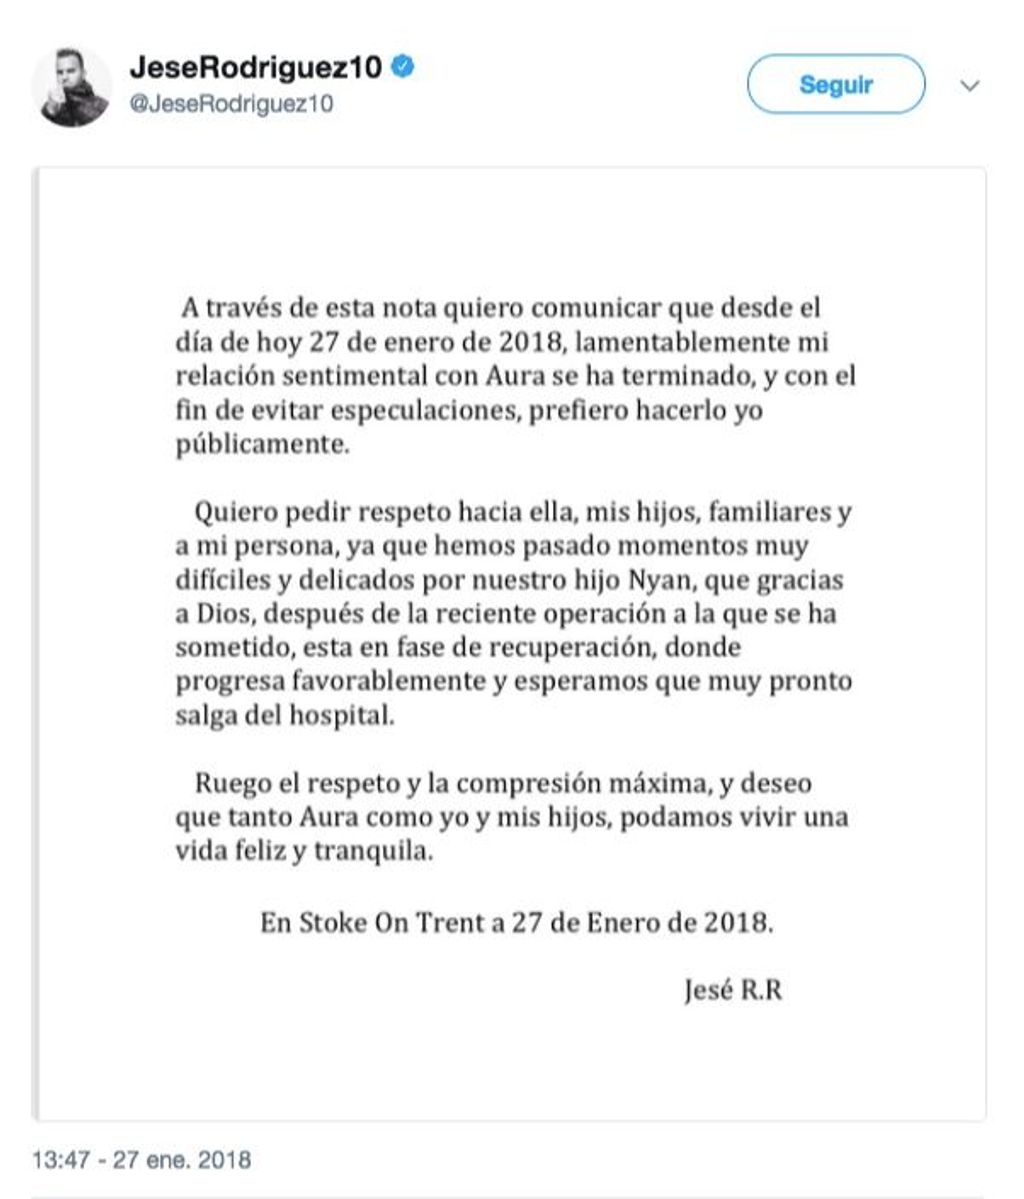 Jesé Rodríguez anuncia su ruptura con Aurah a través de un comunicado